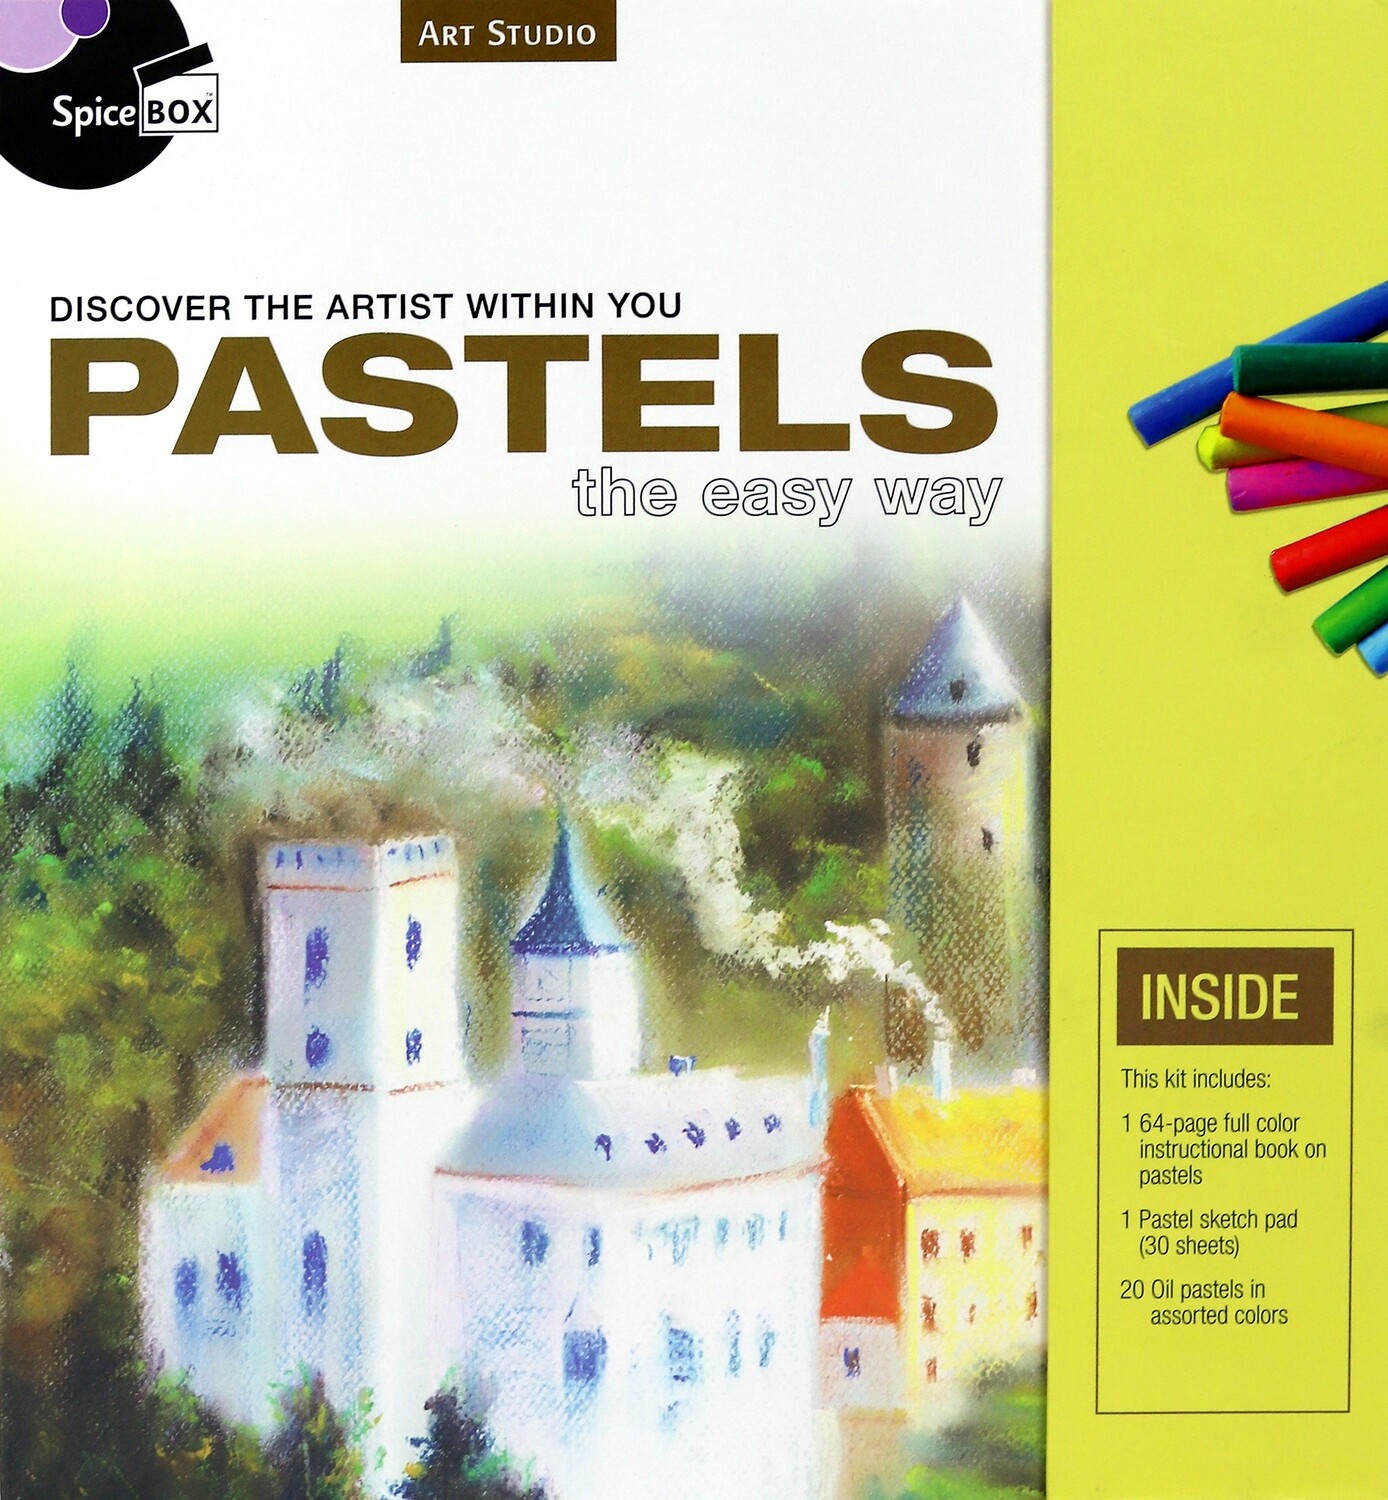 Book Kit: Art Studio Pastel